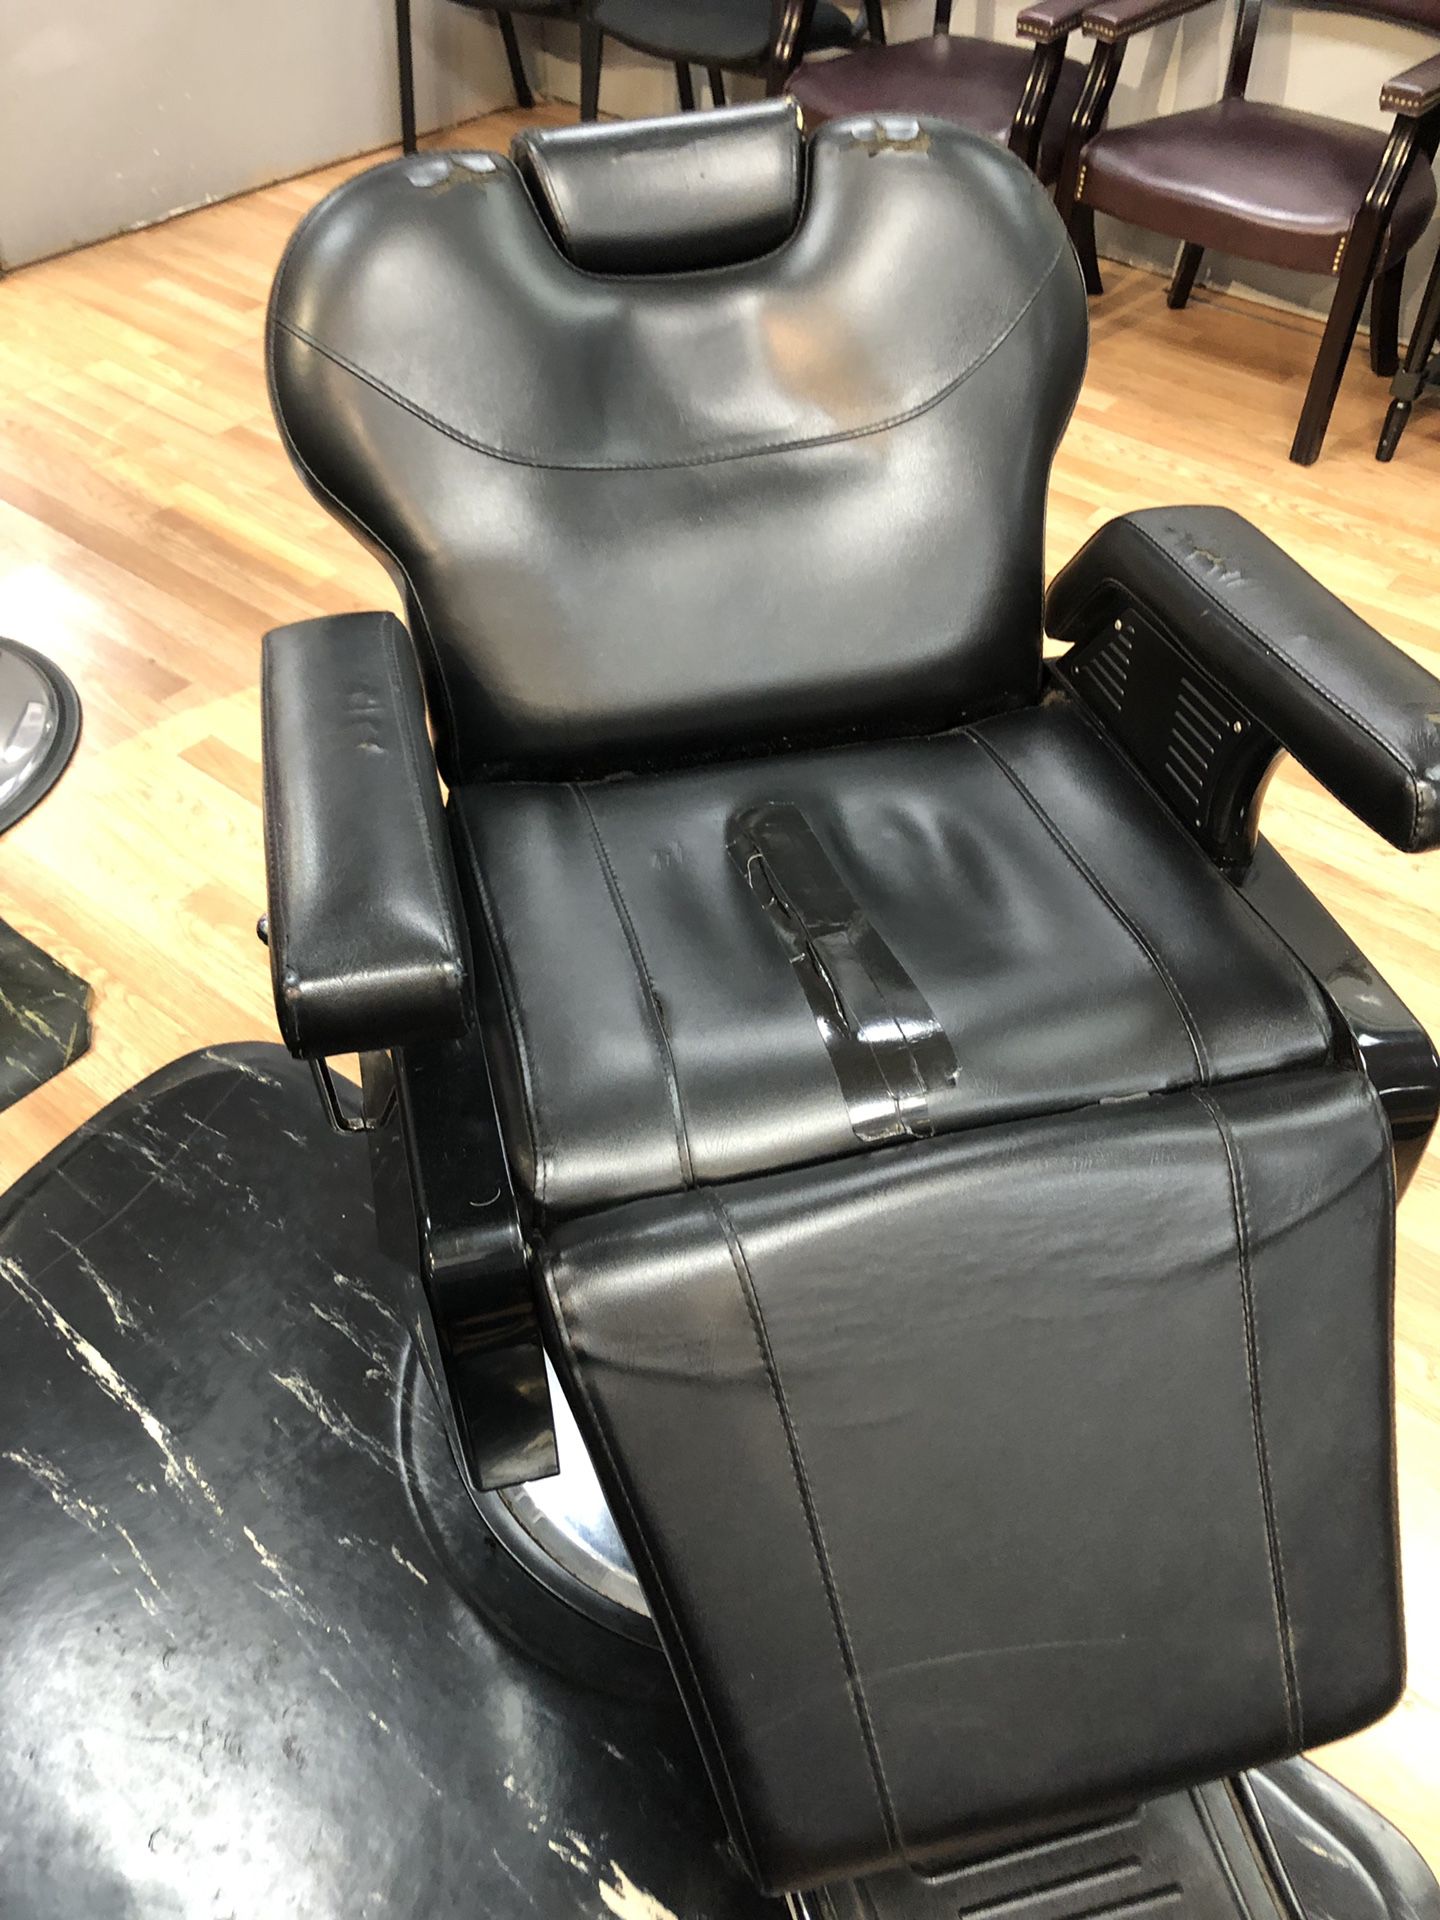 Heavy duty barber chair